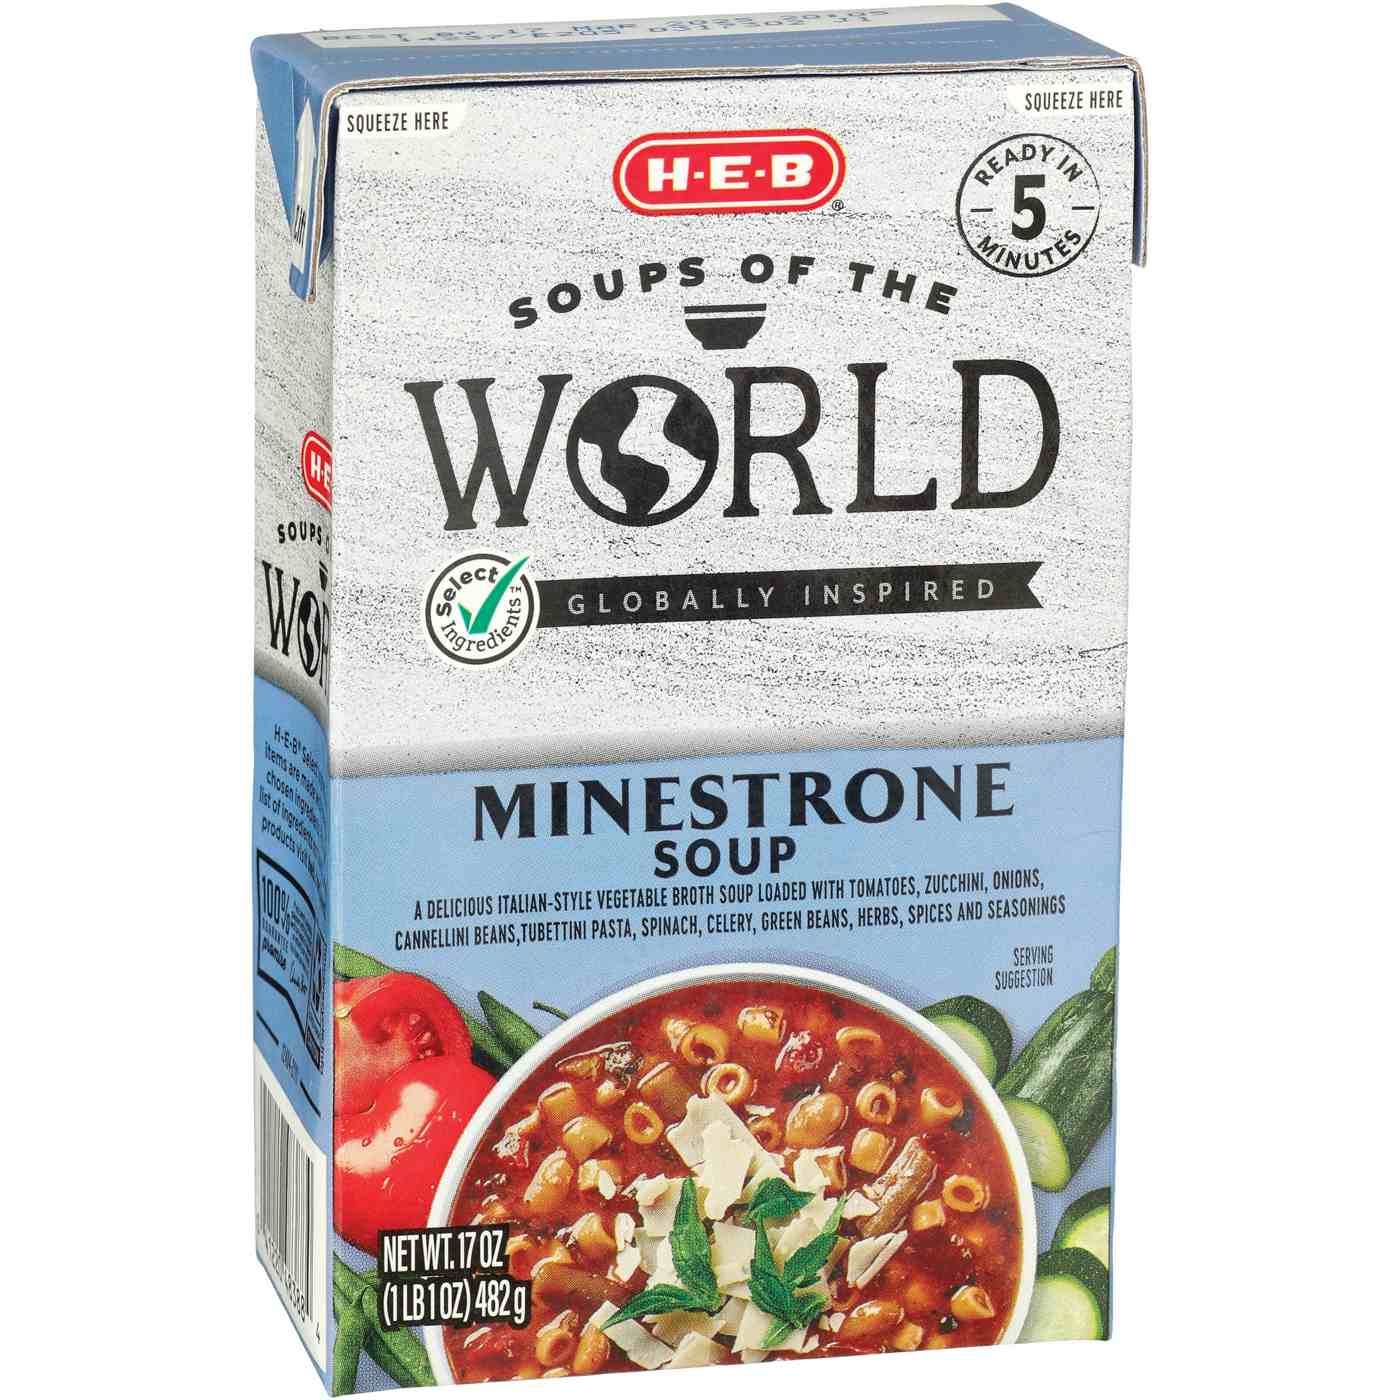 H-E-B Minestrone Soup; image 2 of 2